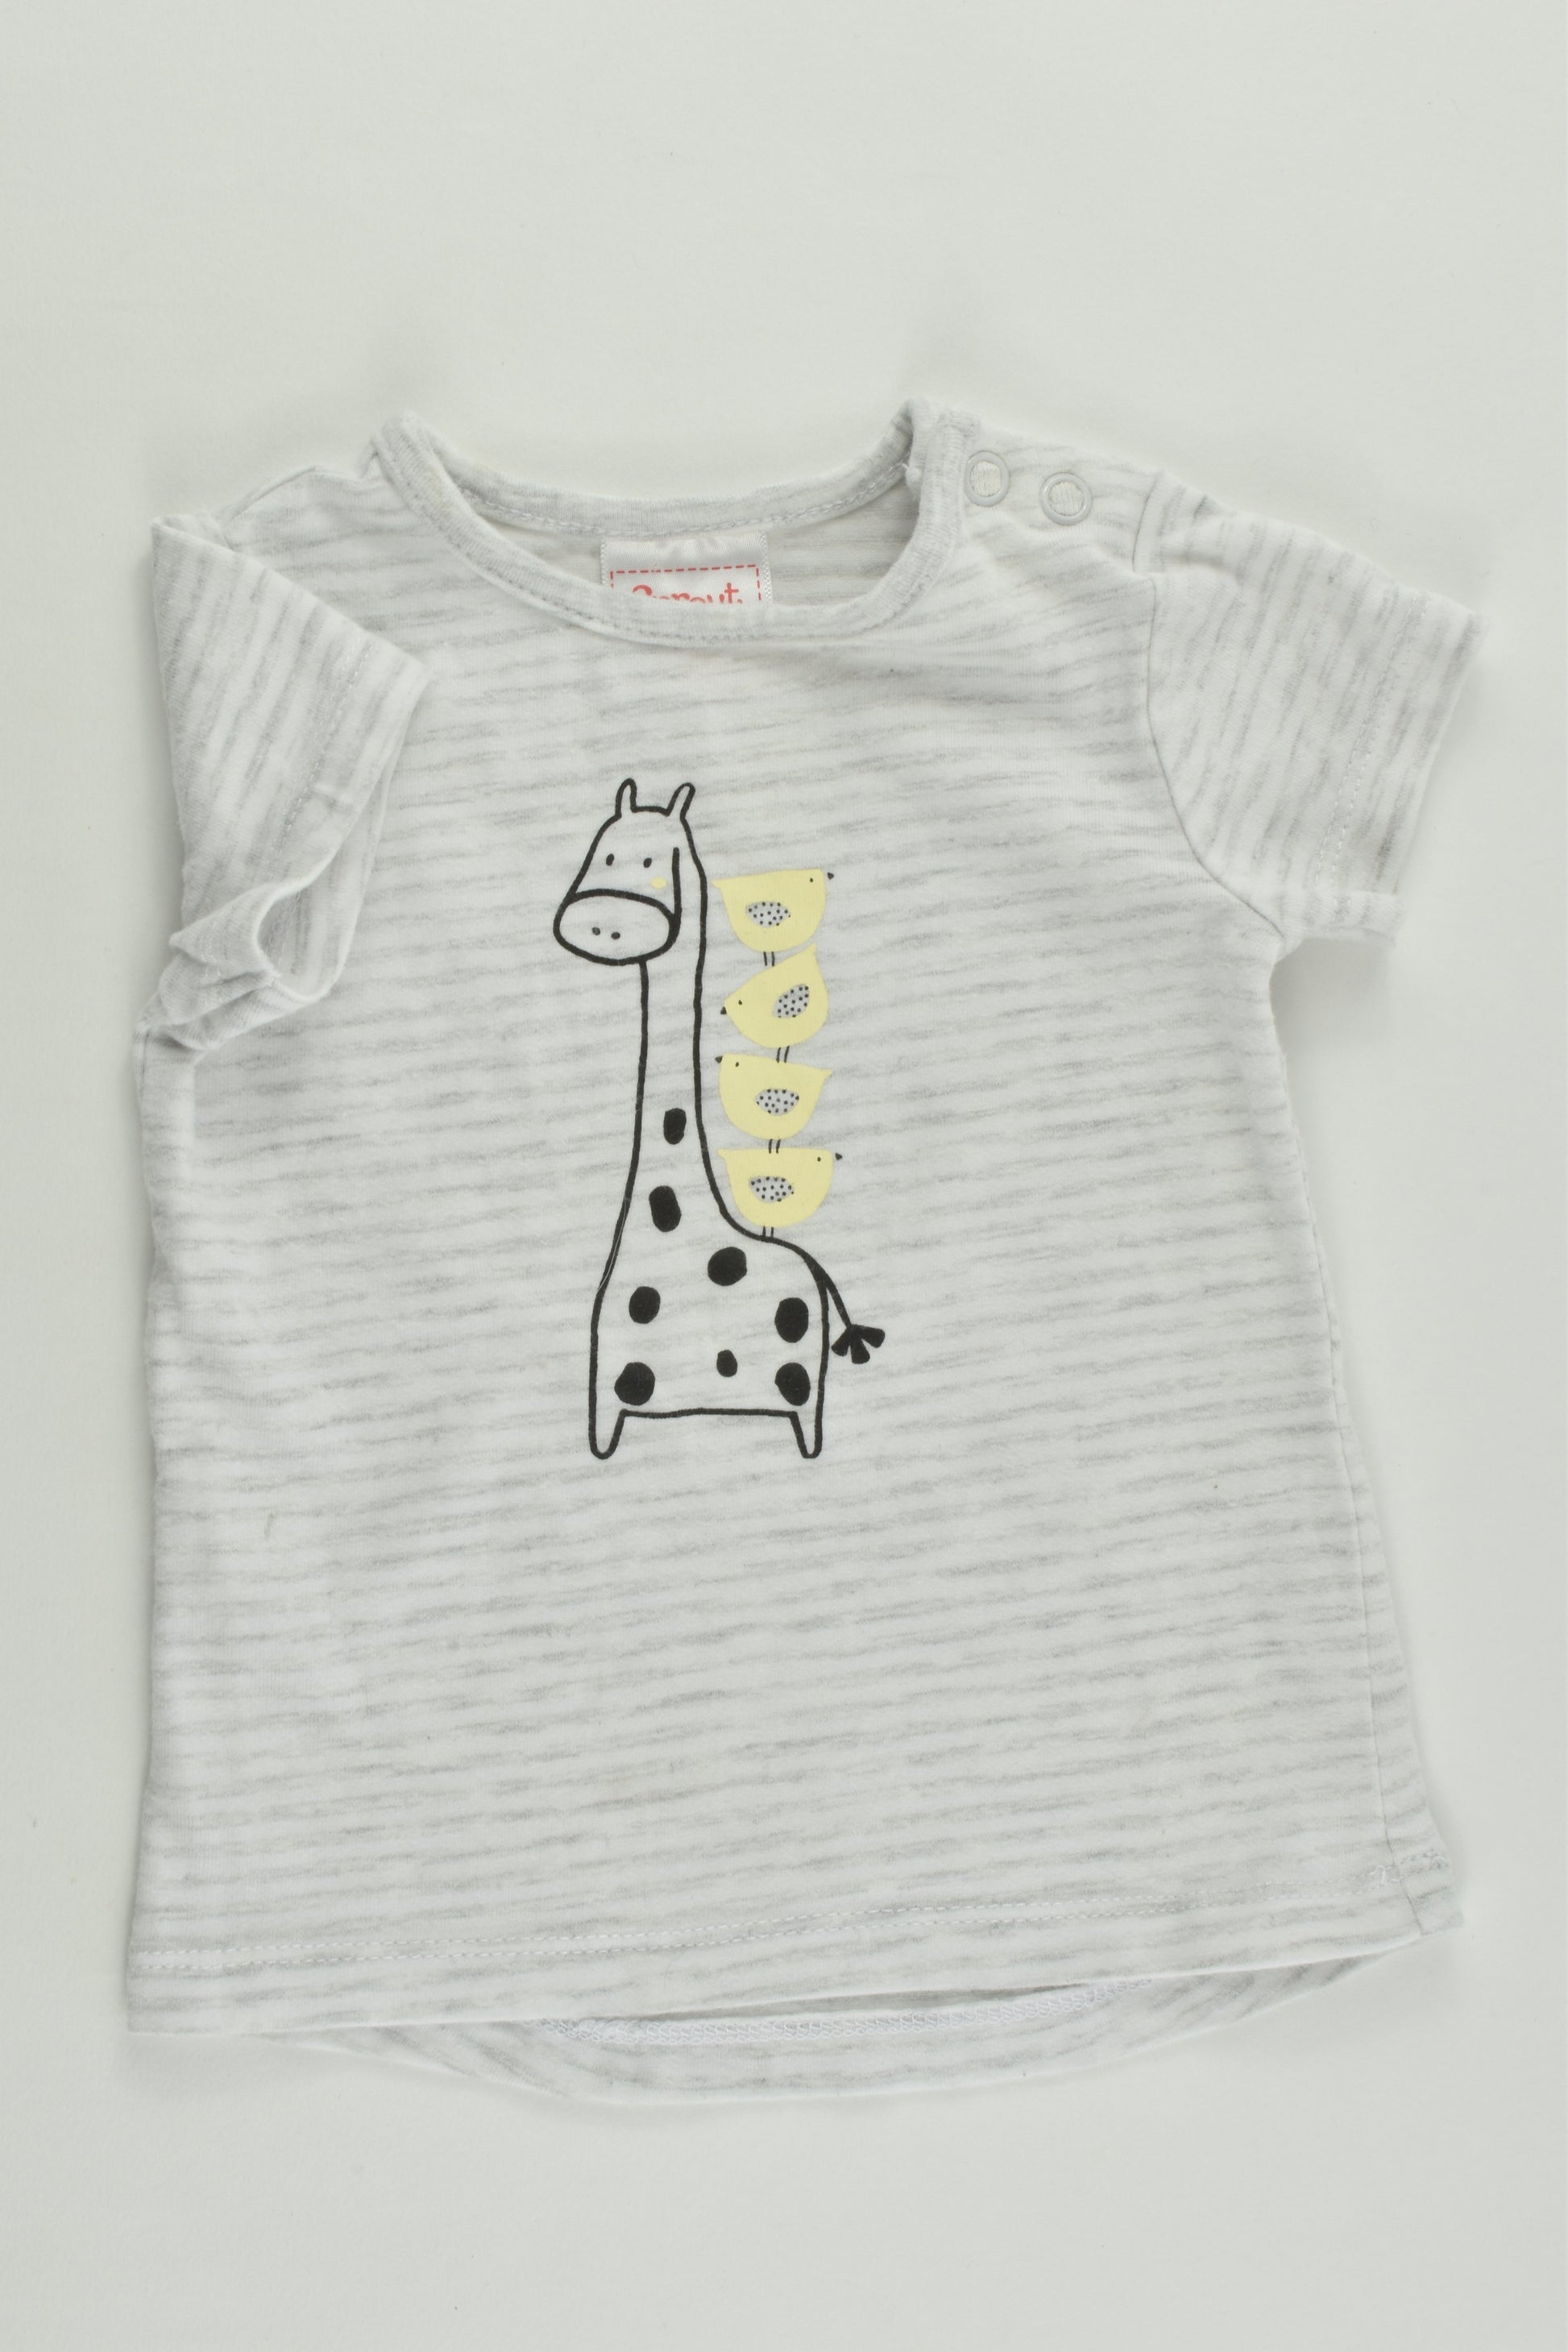 Sprout size 000 (0-3 months) Giraffe and Birds T-shirt